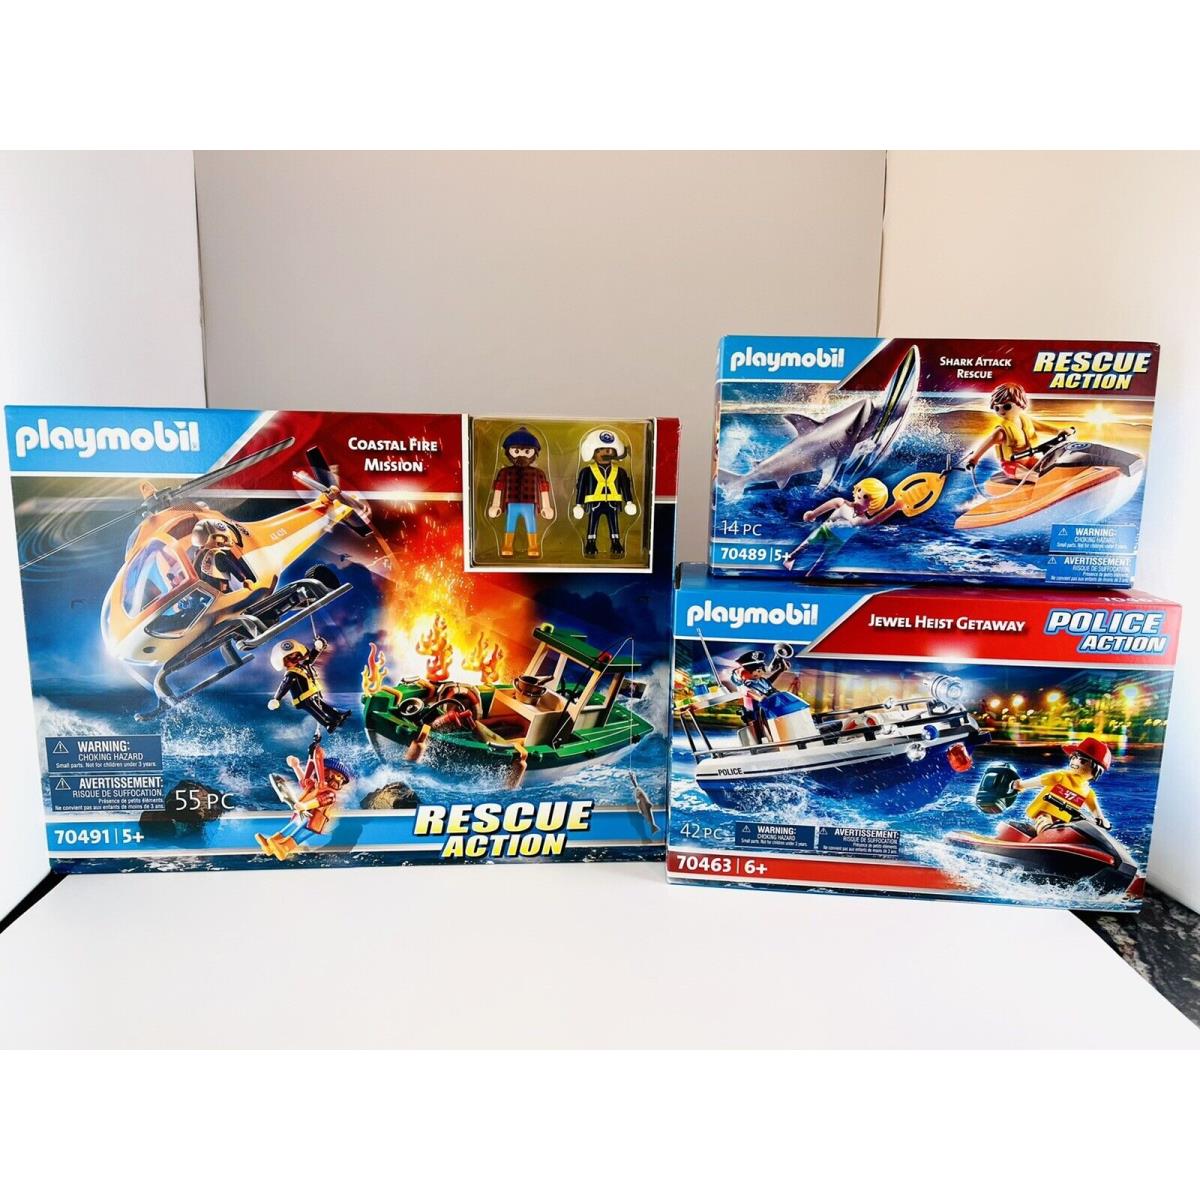 Playmobil Toys Set Of 3 Coastal Fire Mission Jewel Heist Shark Attack